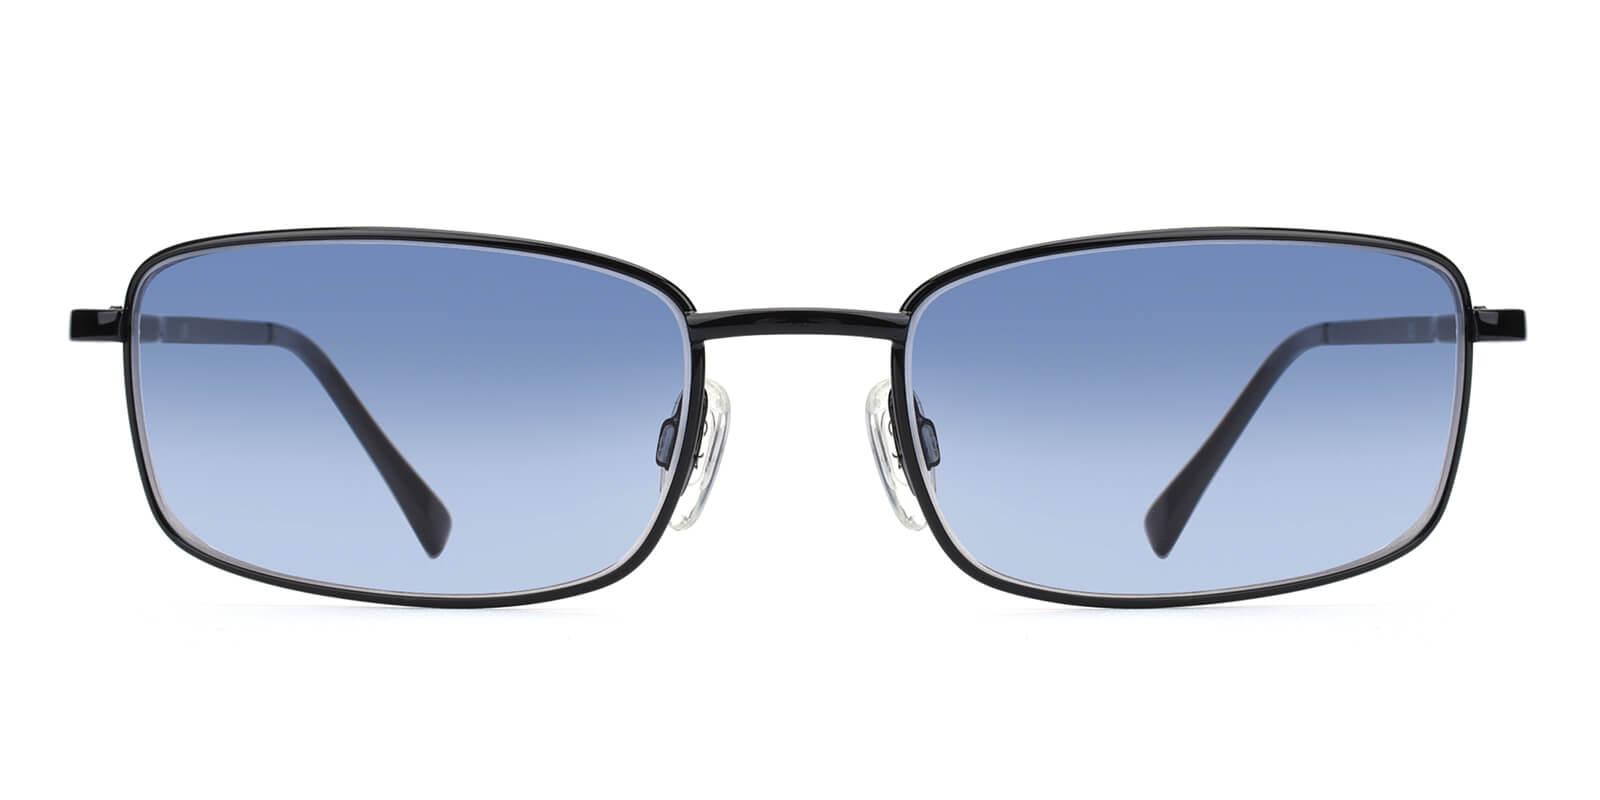 Cheynish-Black-Rectangle-Metal-Sunglasses-detail